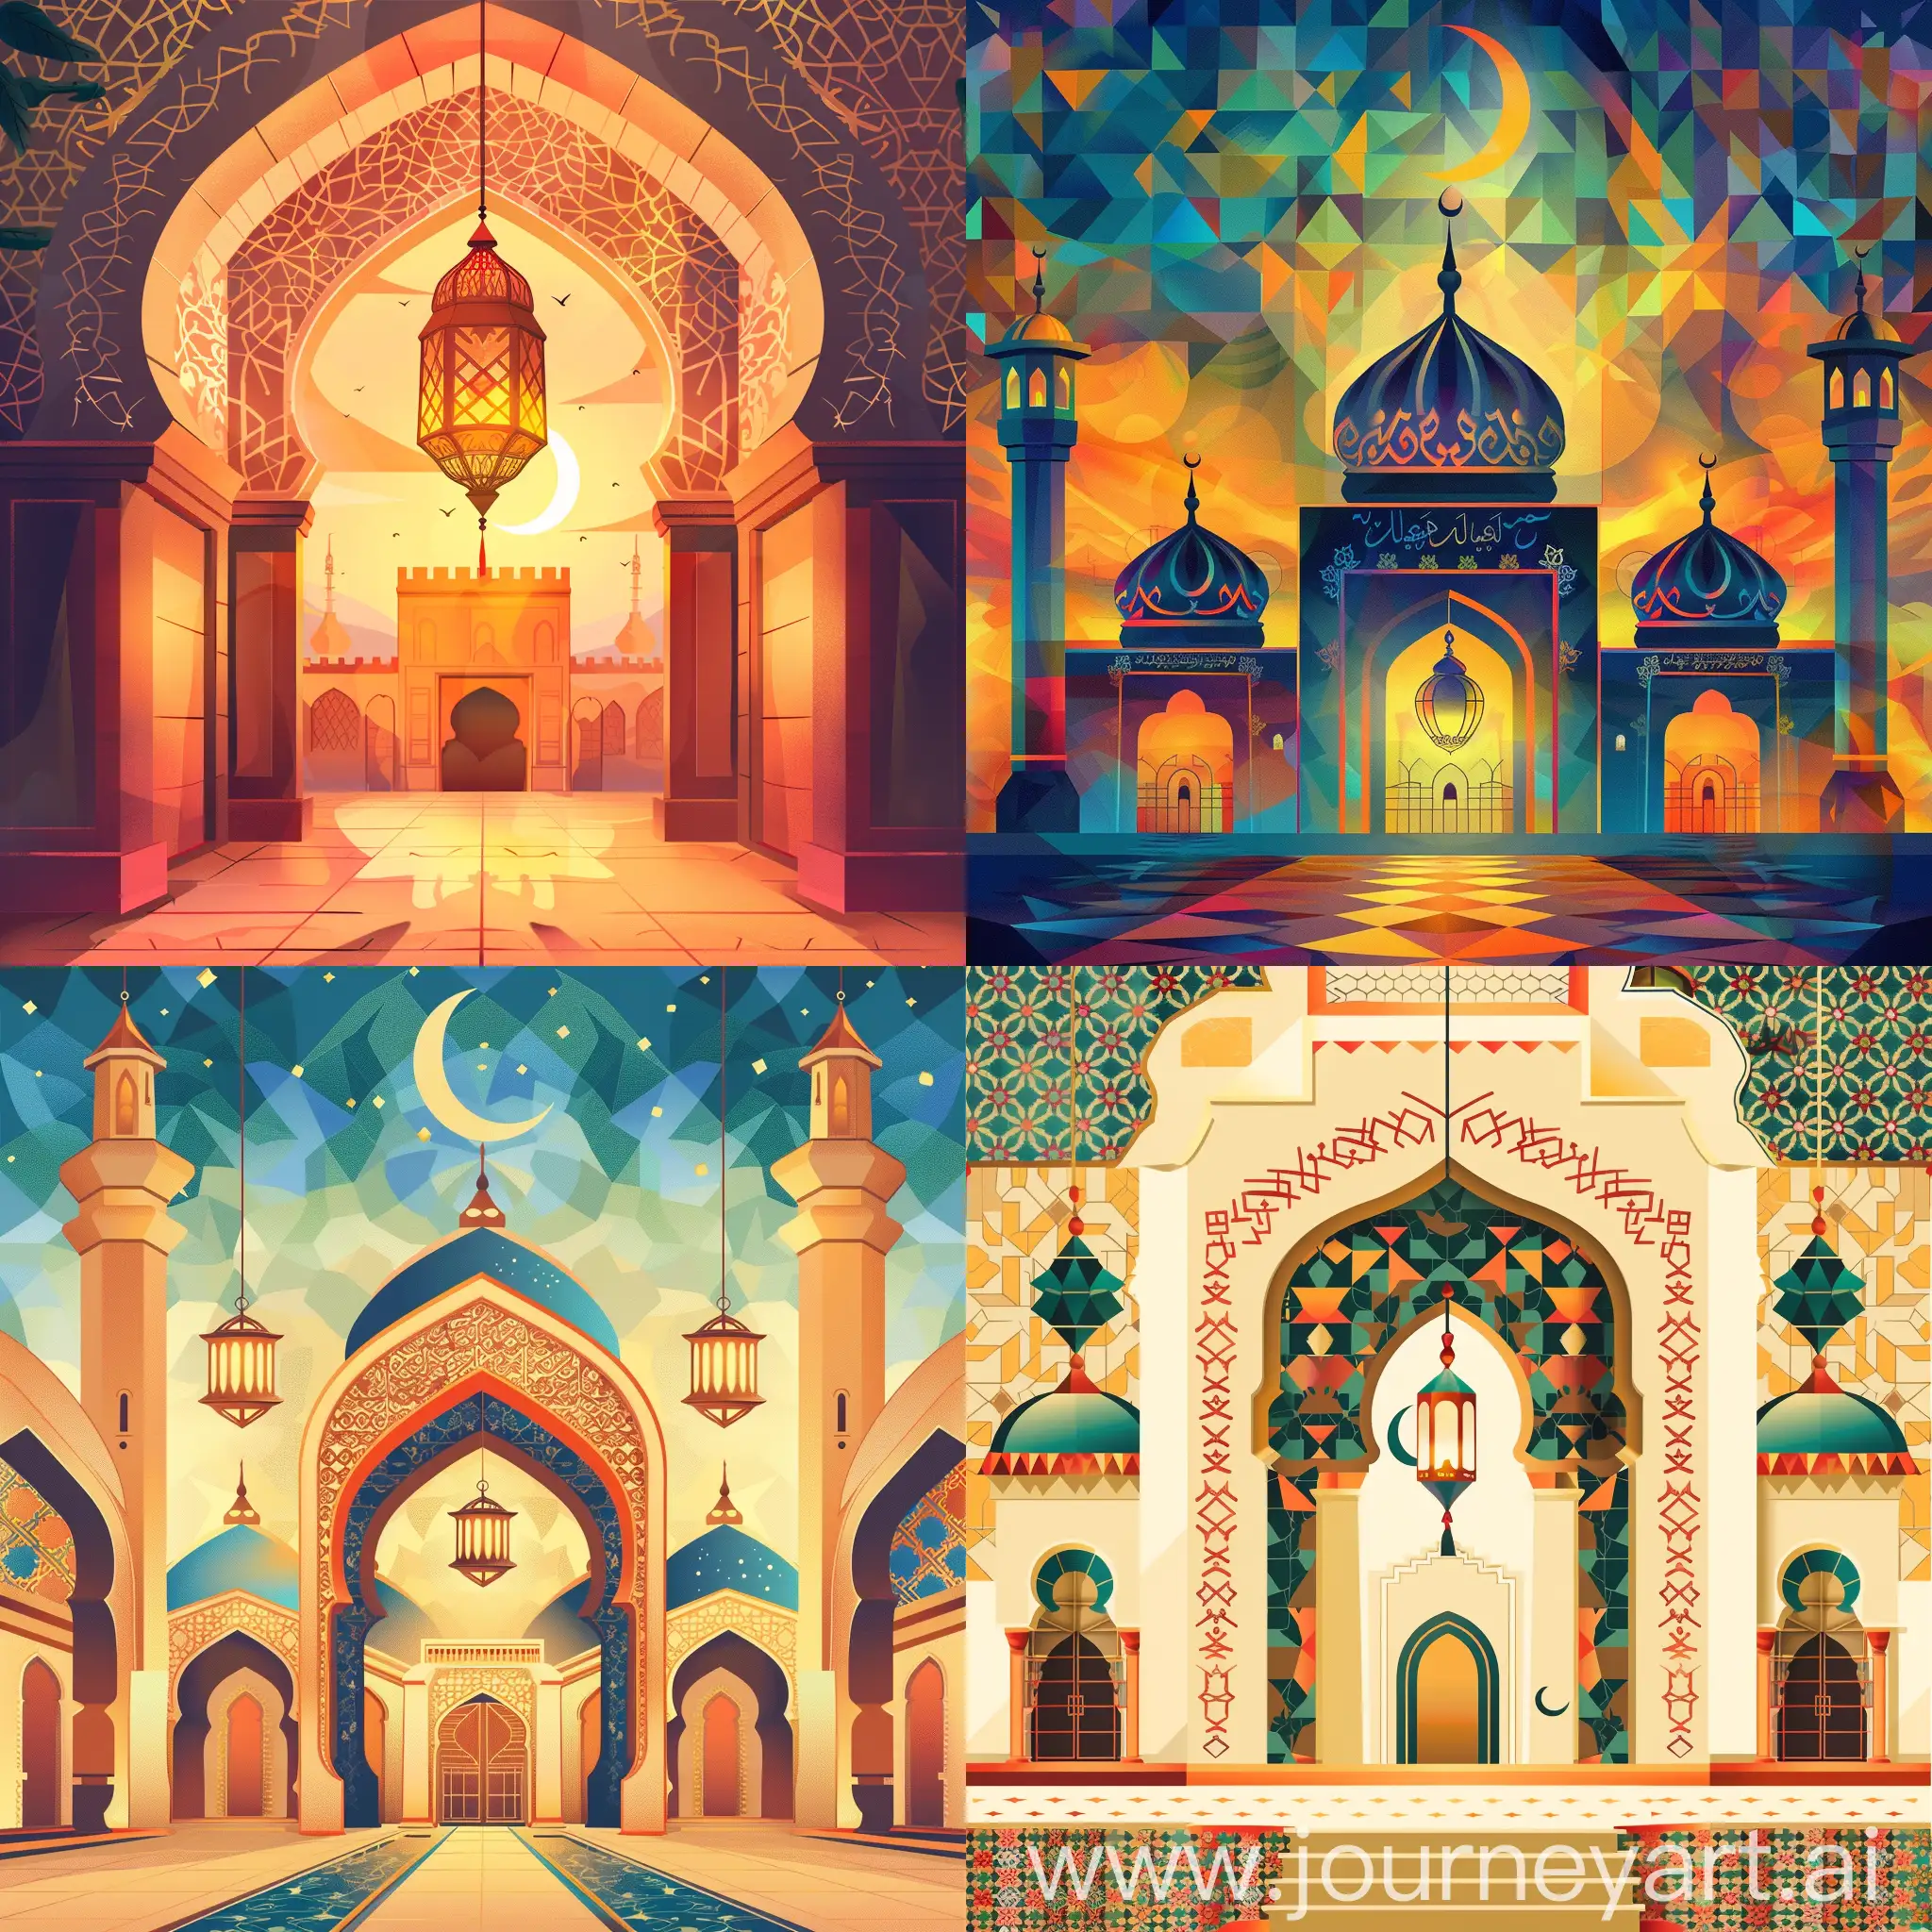 greeting card for ramadan,Ramadan lantern,geometric islamic pattern back ground,warm colors,festival decoration,mosque intrence,sky and cresent.